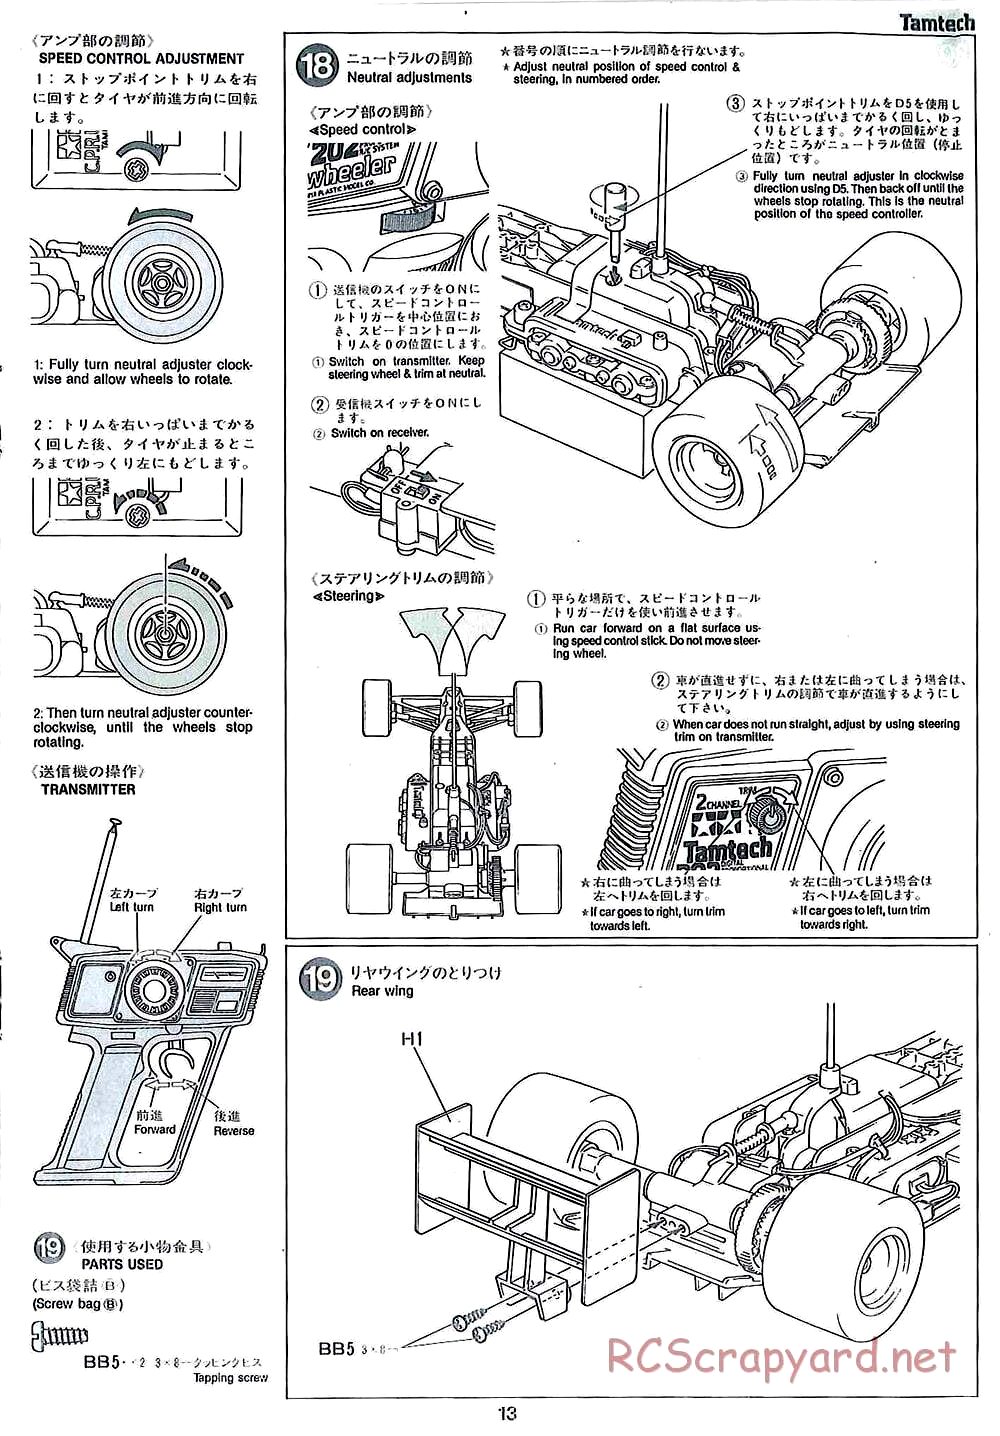 Tamiya - TamTech - F1 Chassis - Manual - Page 13